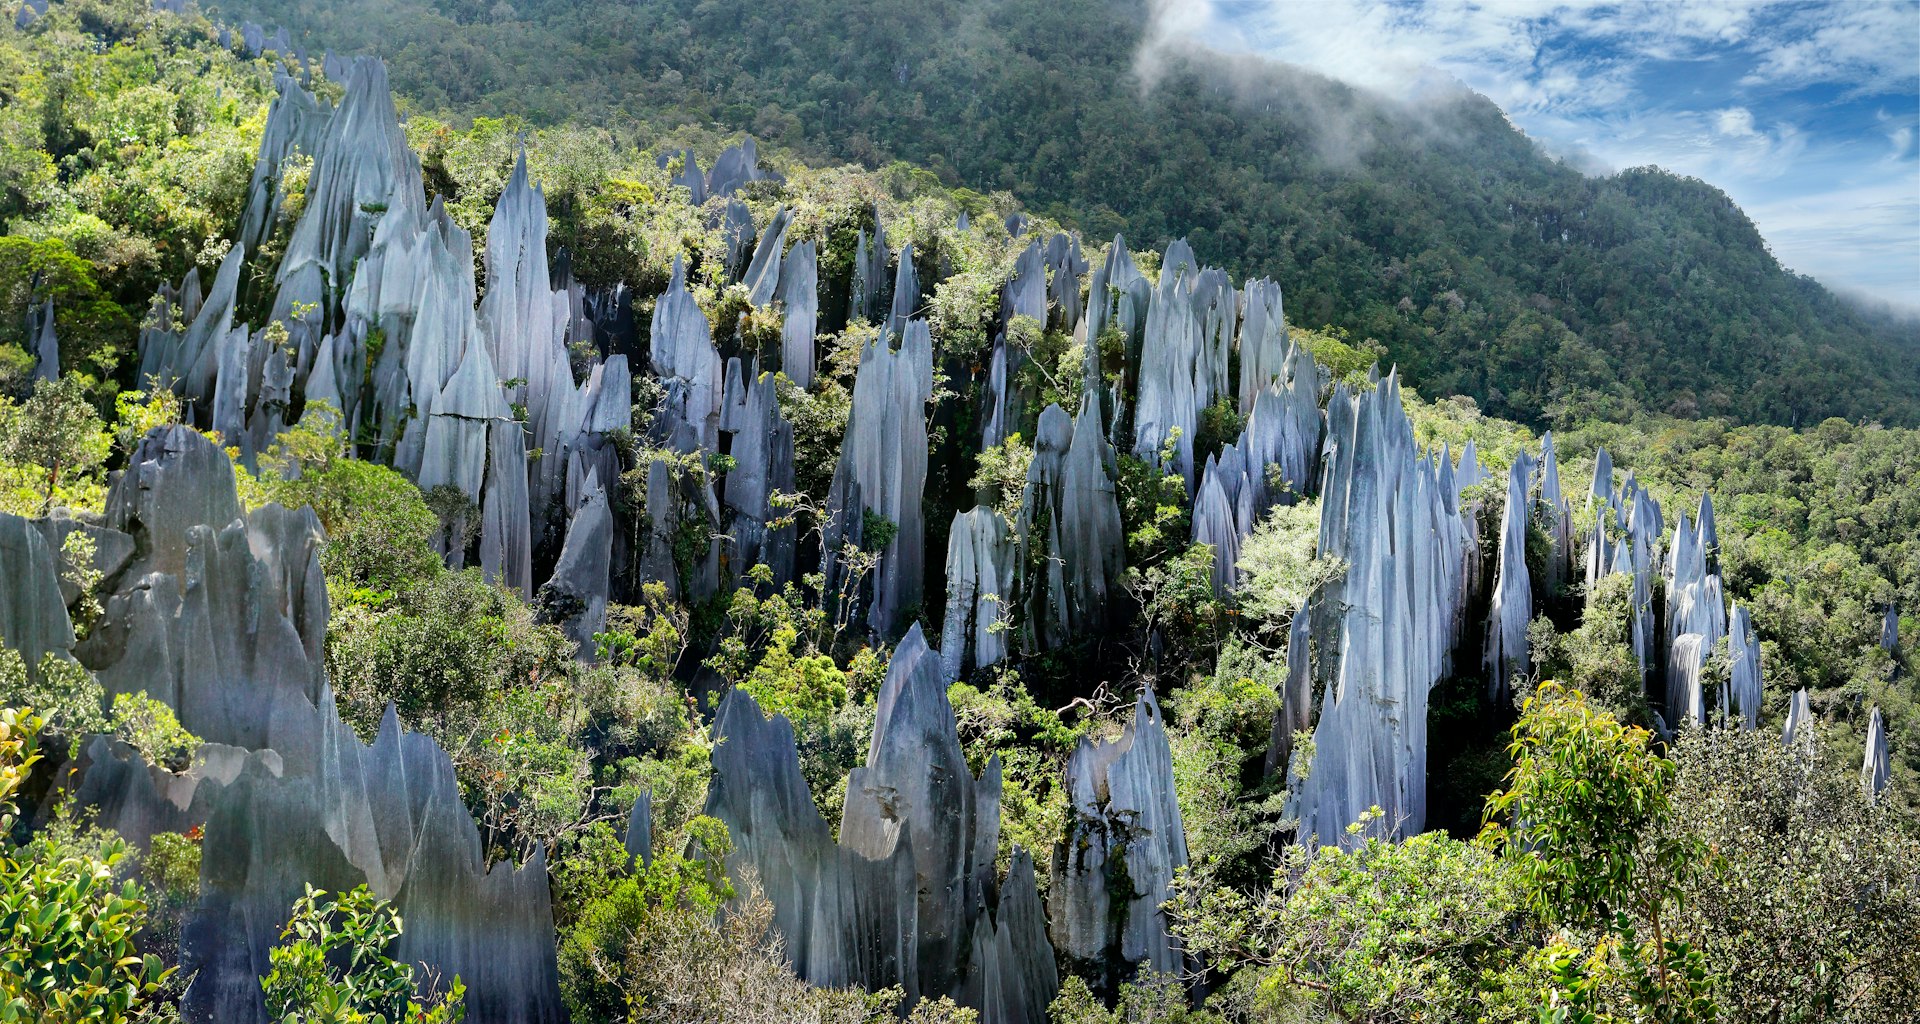 Pinnacles rock formations in Gunung Mulu National Park